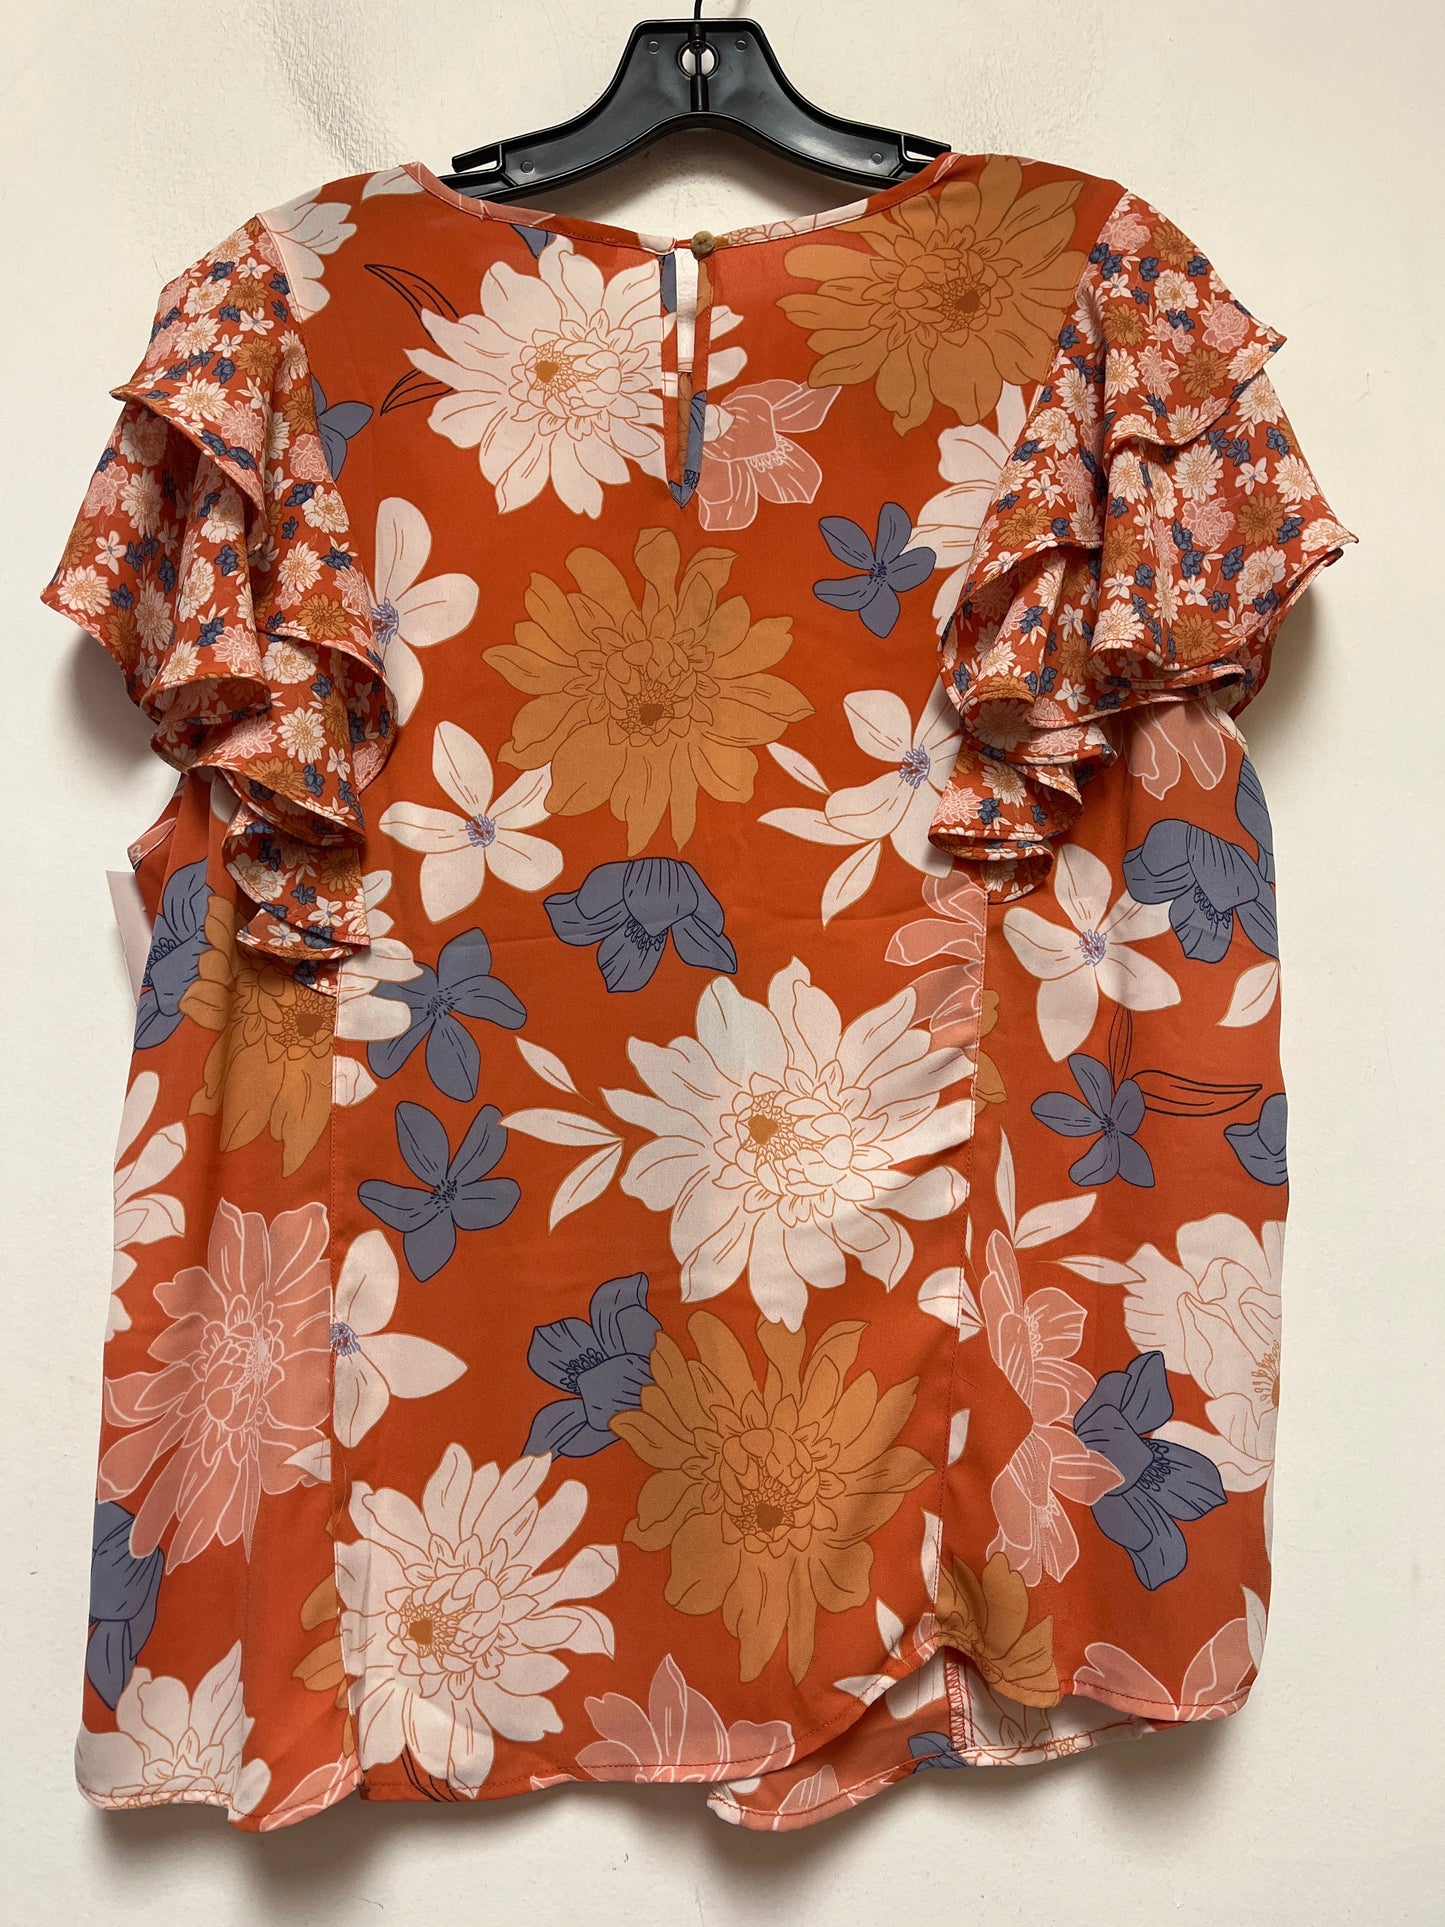 Floral Print Top Short Sleeve Dr2, Size Xxl